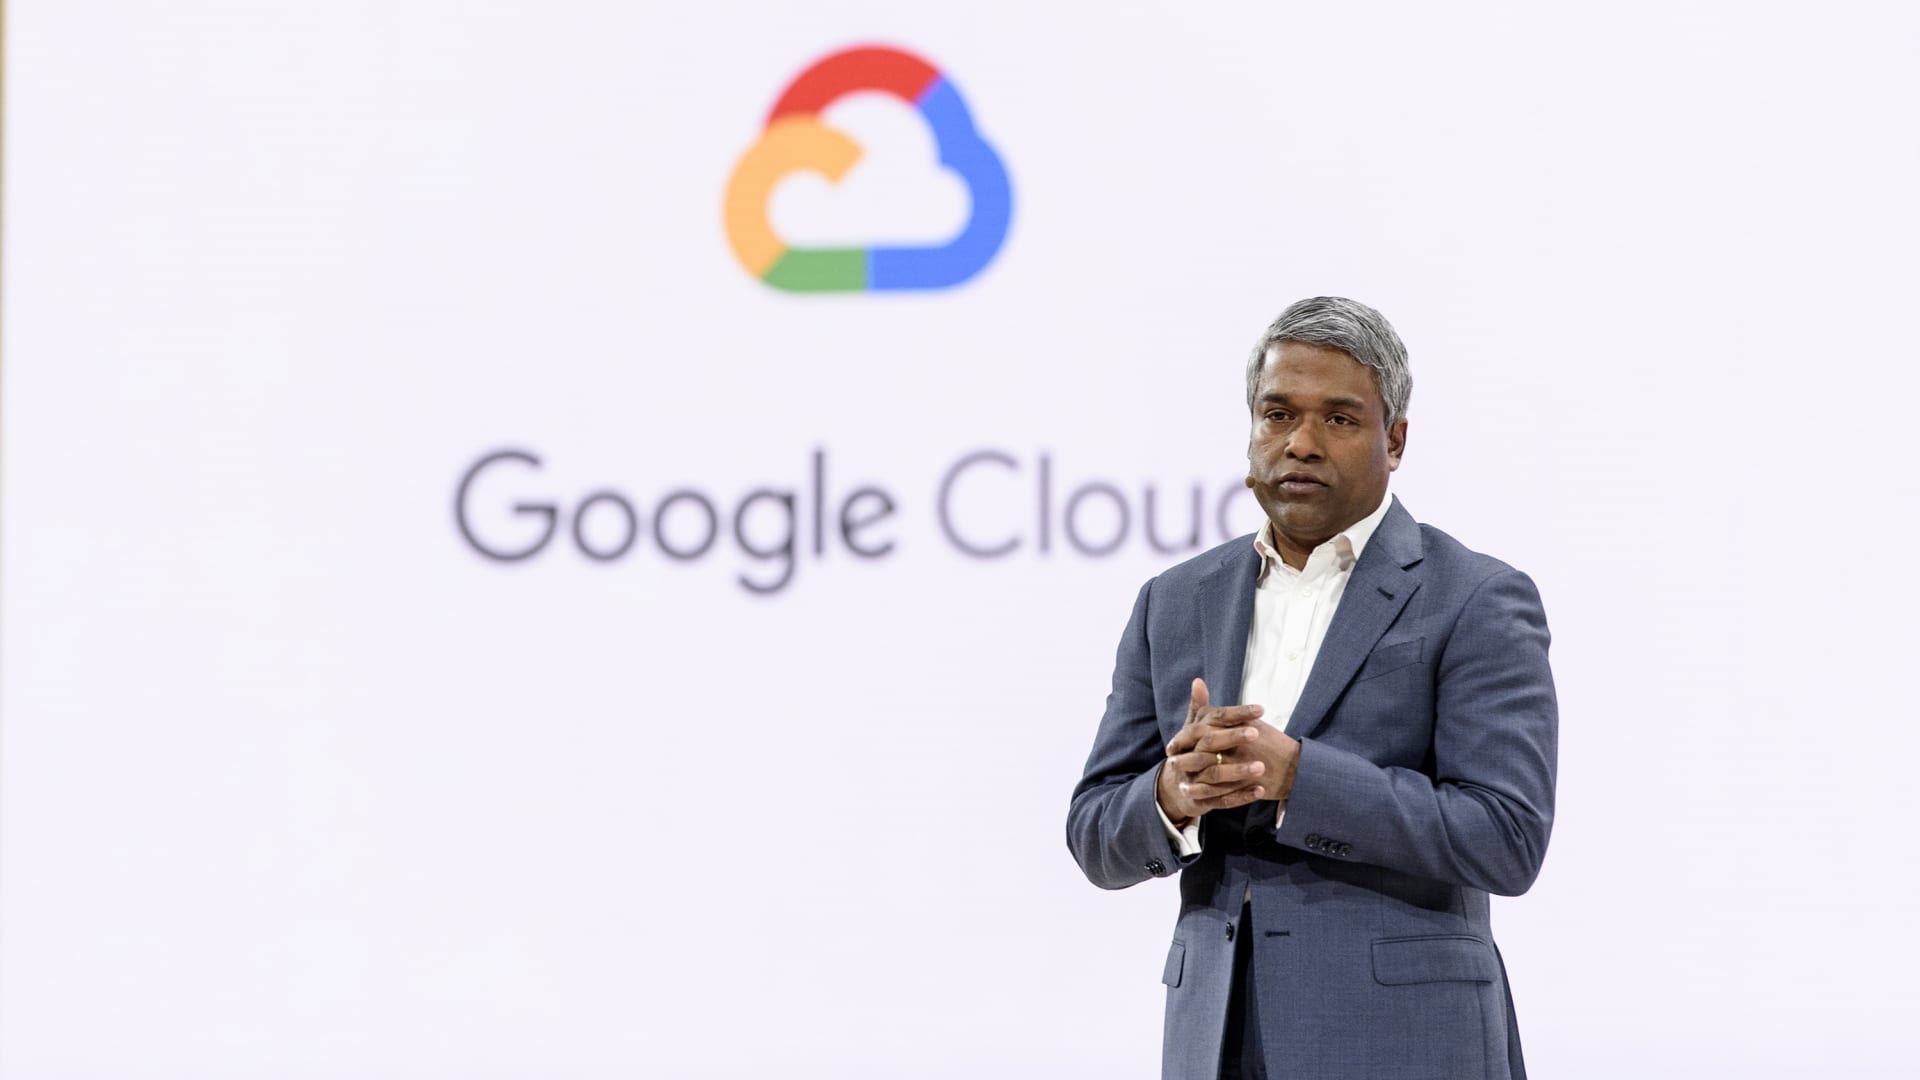 Google cuts at least 100 jobs across cloud unit, sources say